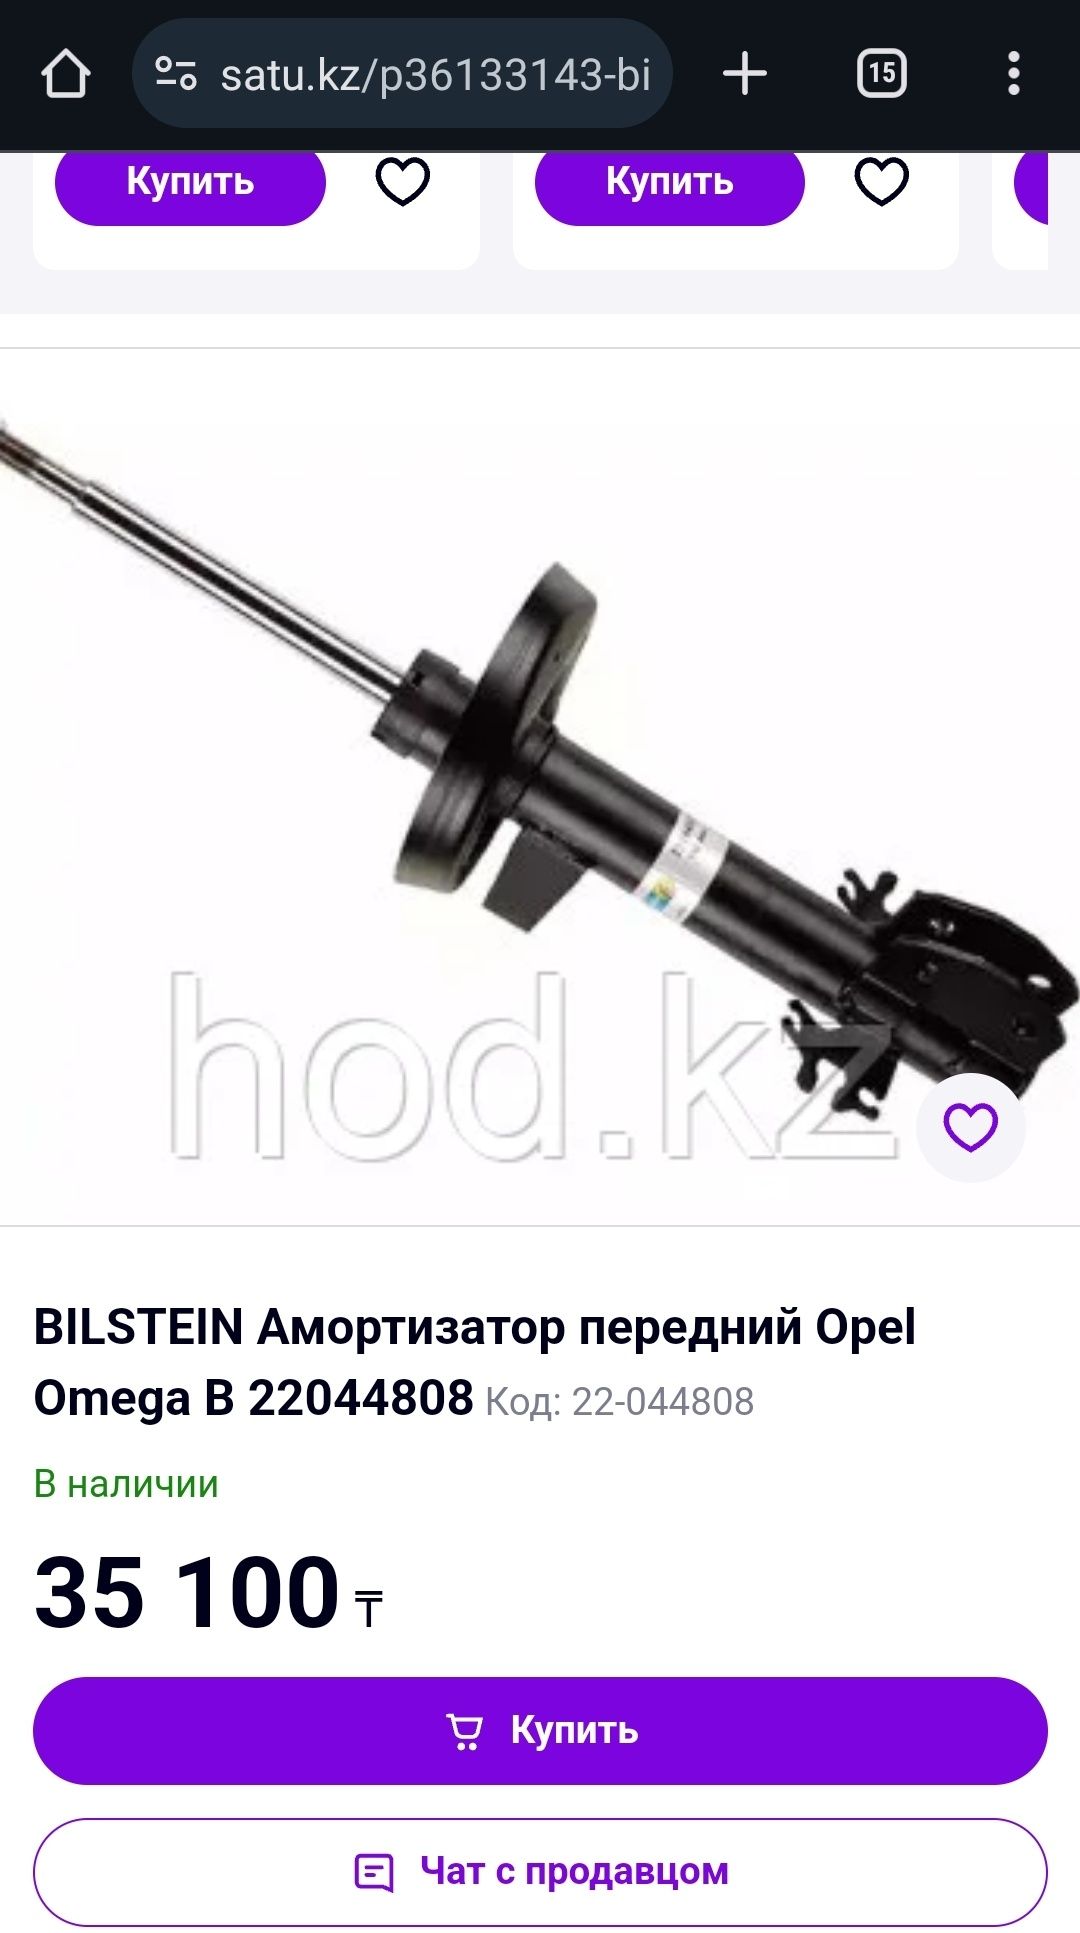 Амортизаторы передние Bilstein Opel Omega